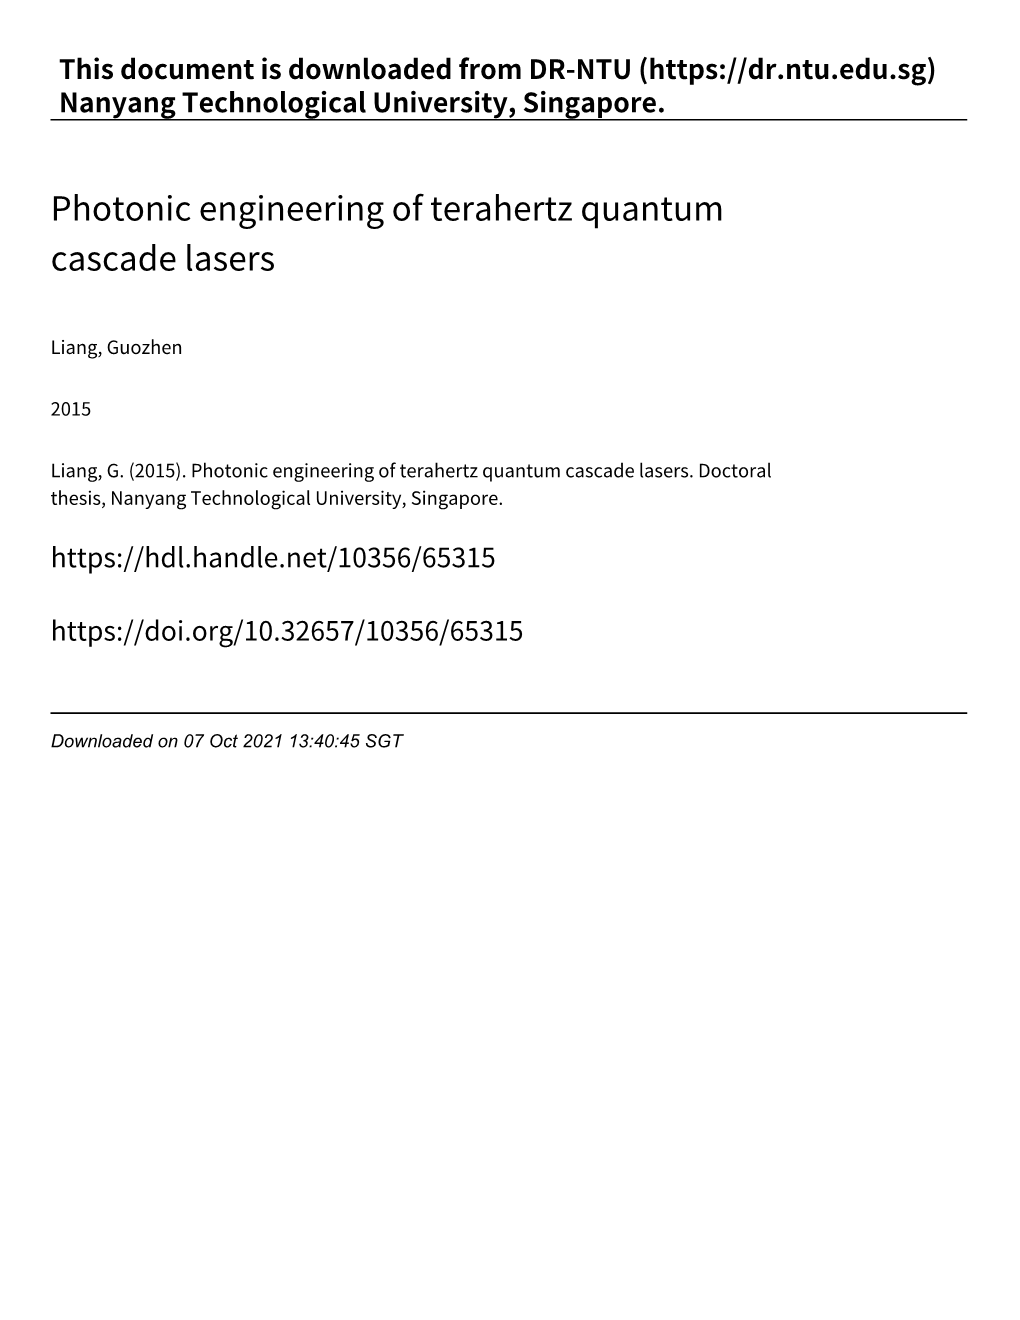 Photonic Engineering of Terahertz Quantum Cascade Lasers